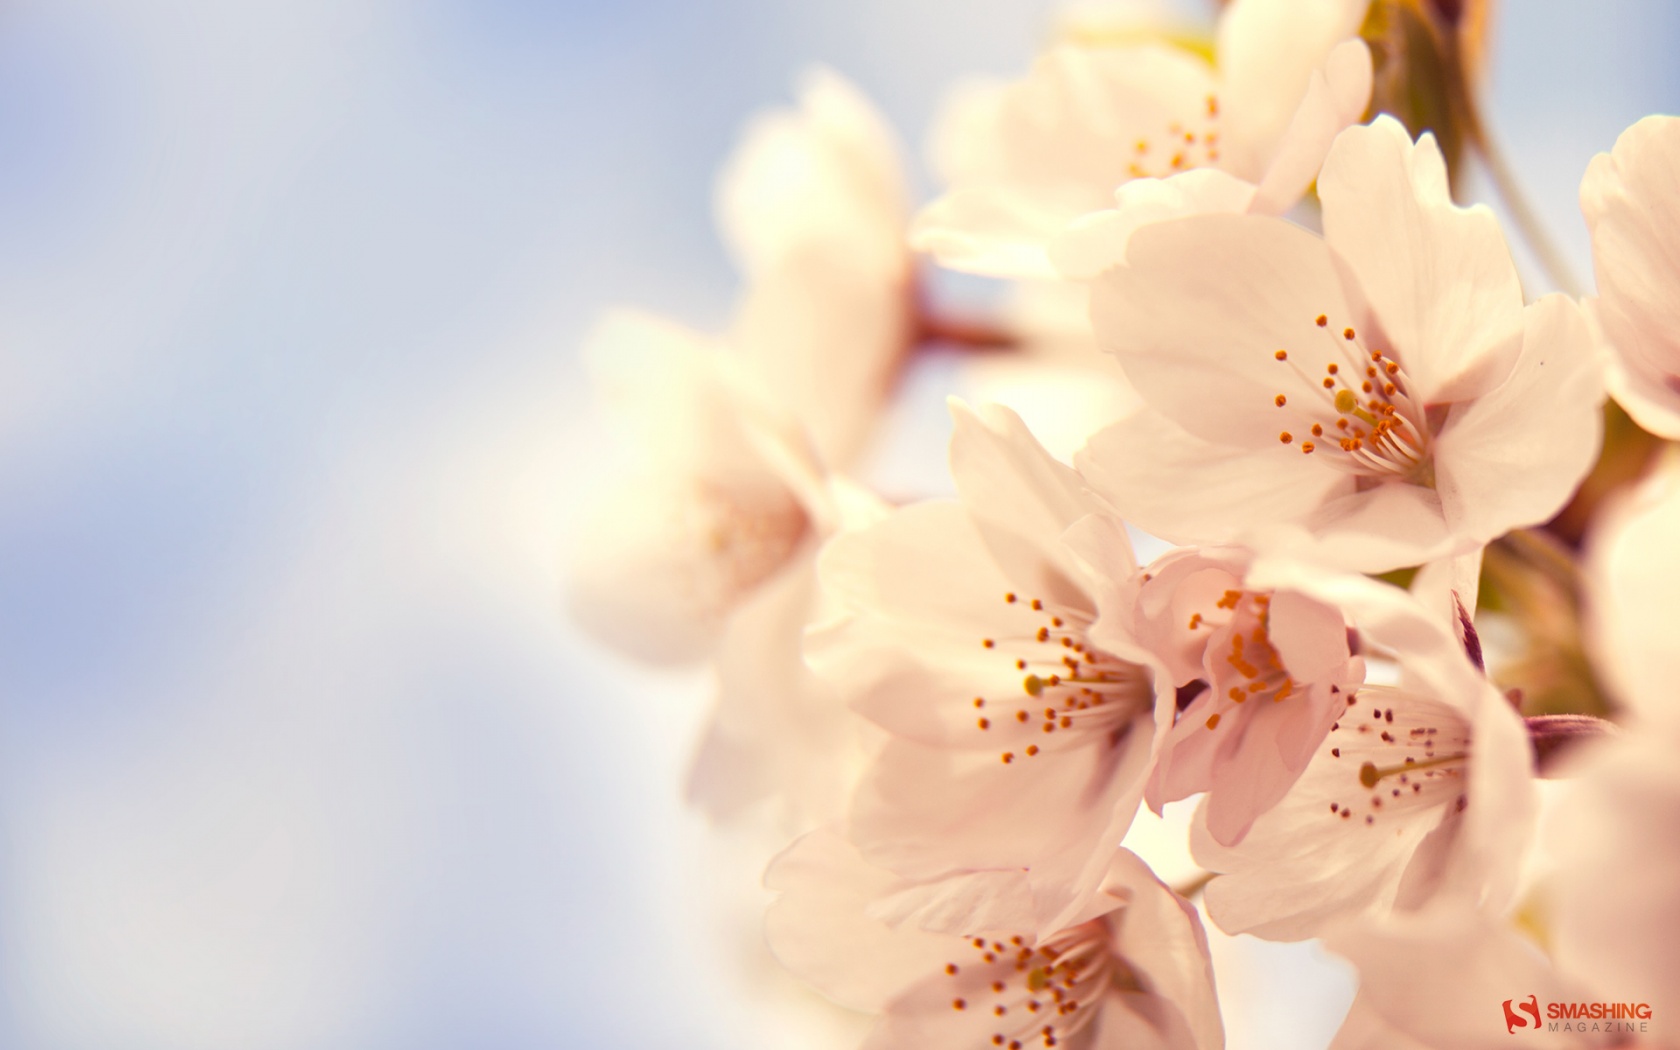 Cherry Blossom Desktop Pc And Mac Wallpaper